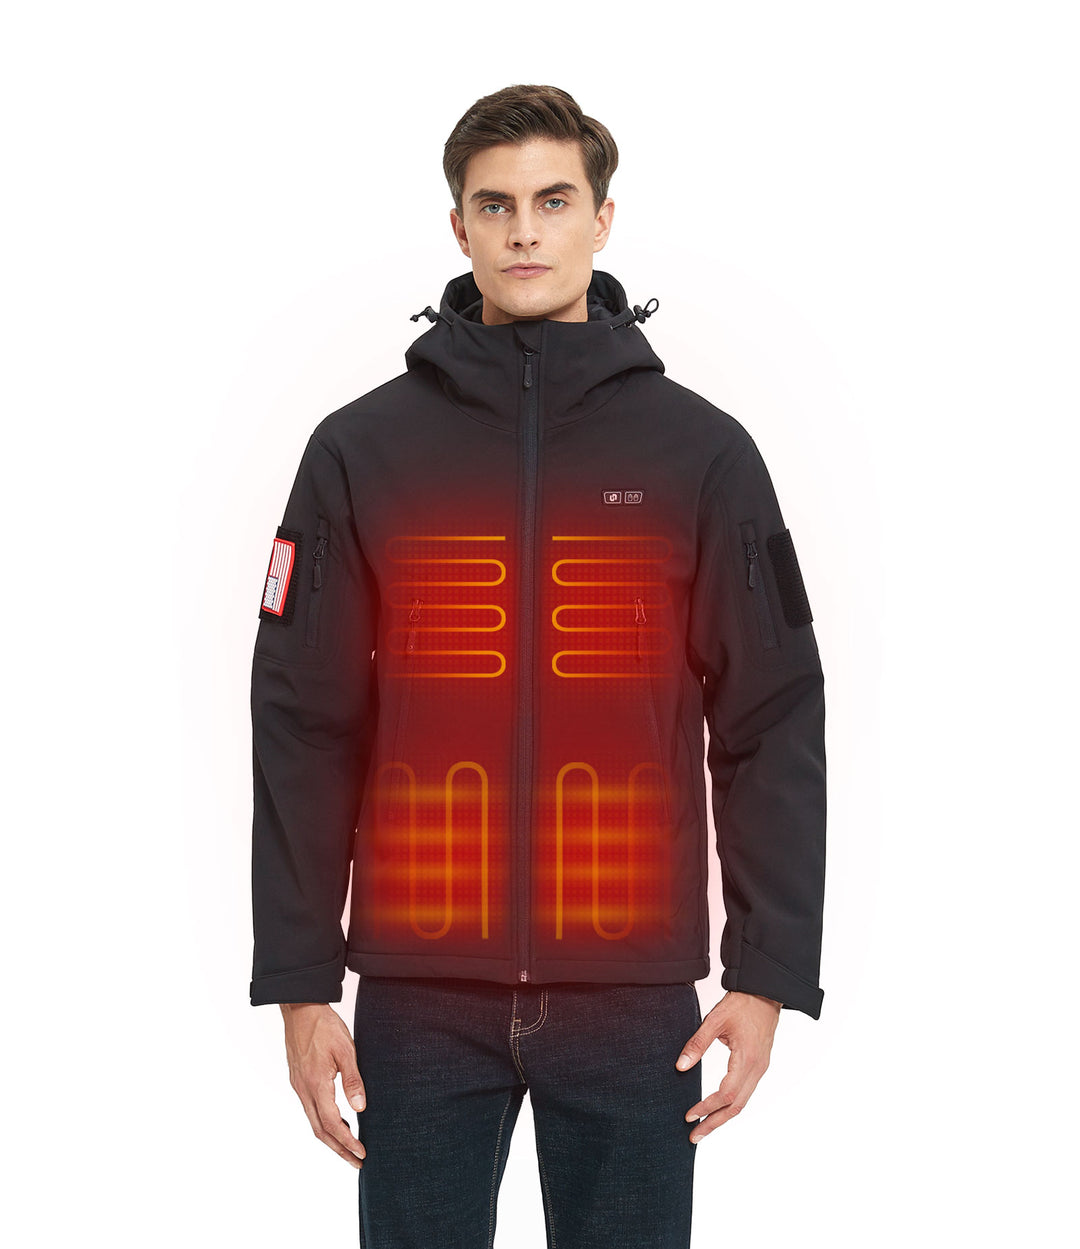 Men's Heated Jacket - Black (Dual-Control)